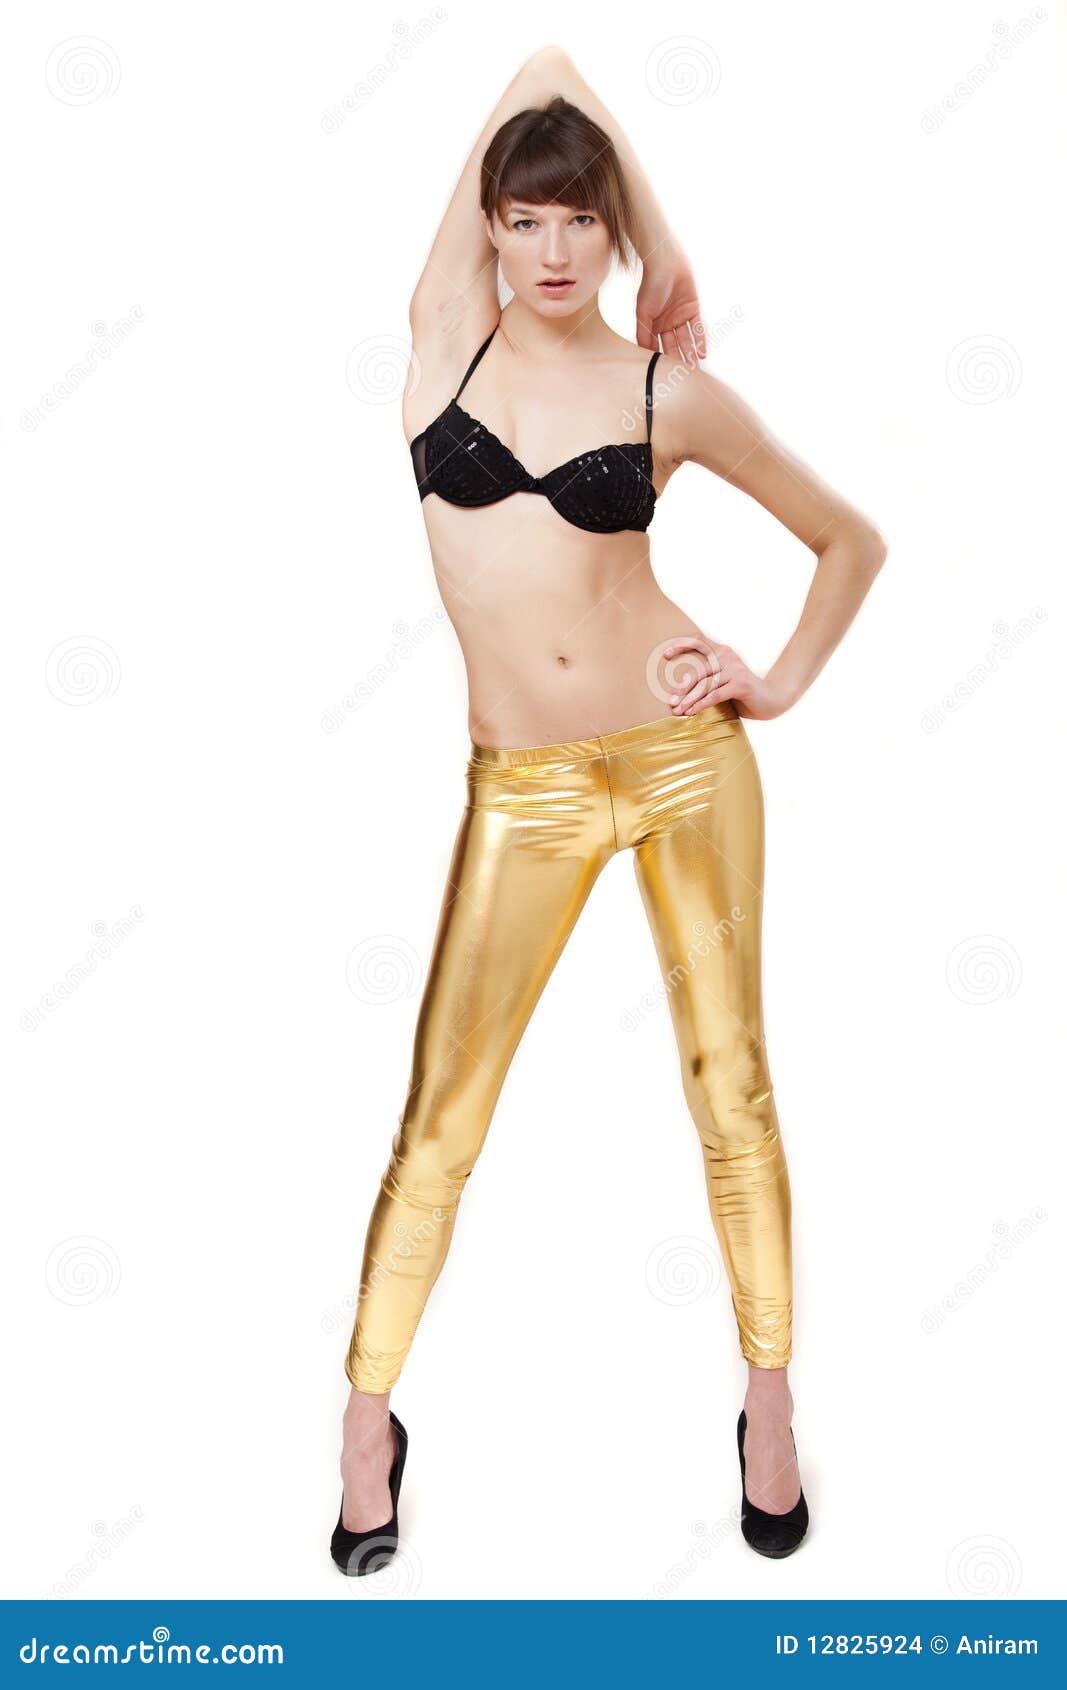 https://thumbs.dreamstime.com/z/woman-gold-leggings-12825924.jpg